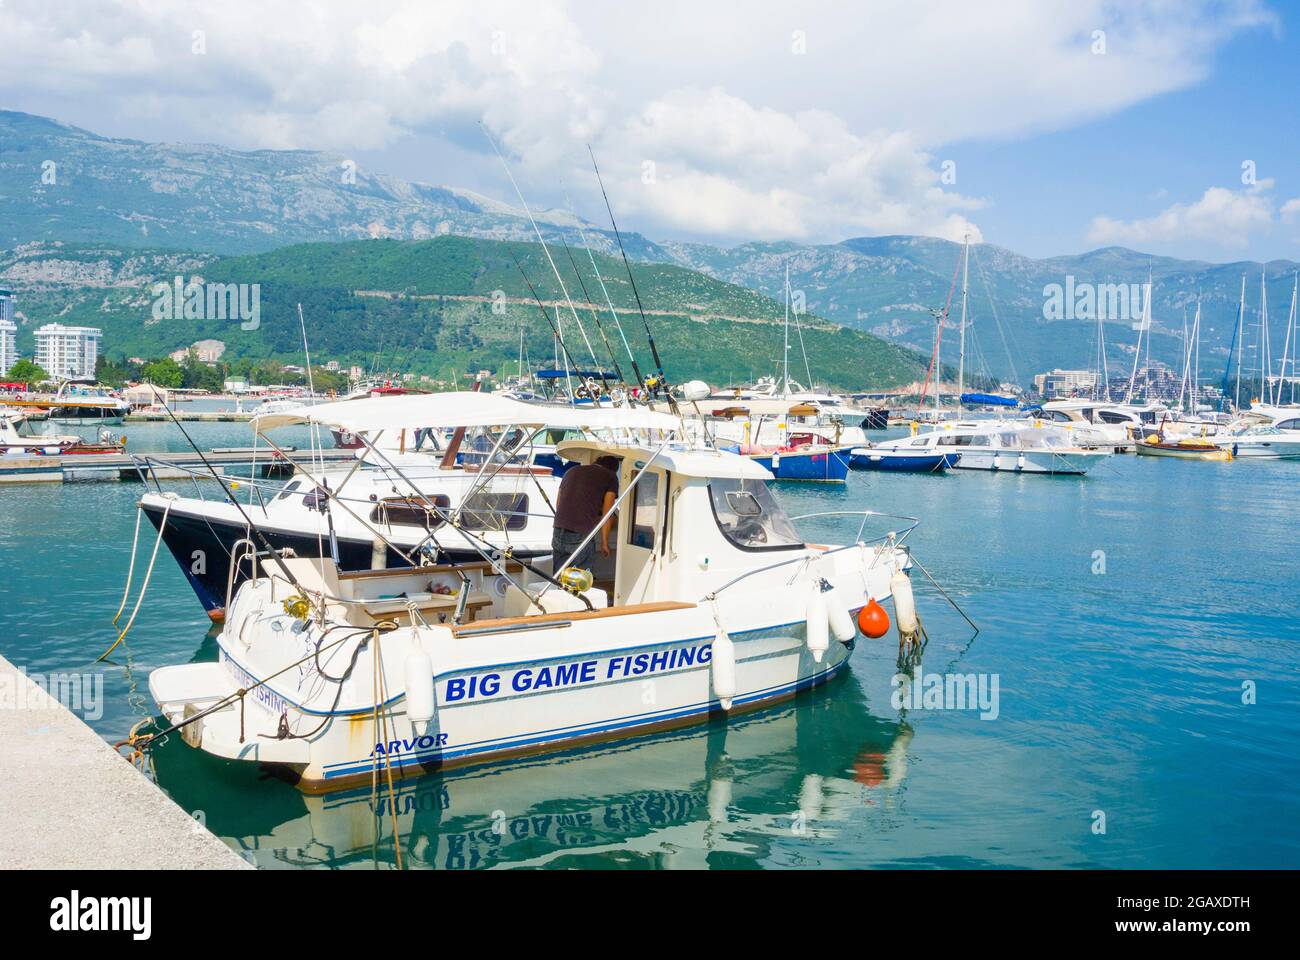 Big game fishing boat, Dukley Marina, Budva, Montenegro, Europe Stock Photo